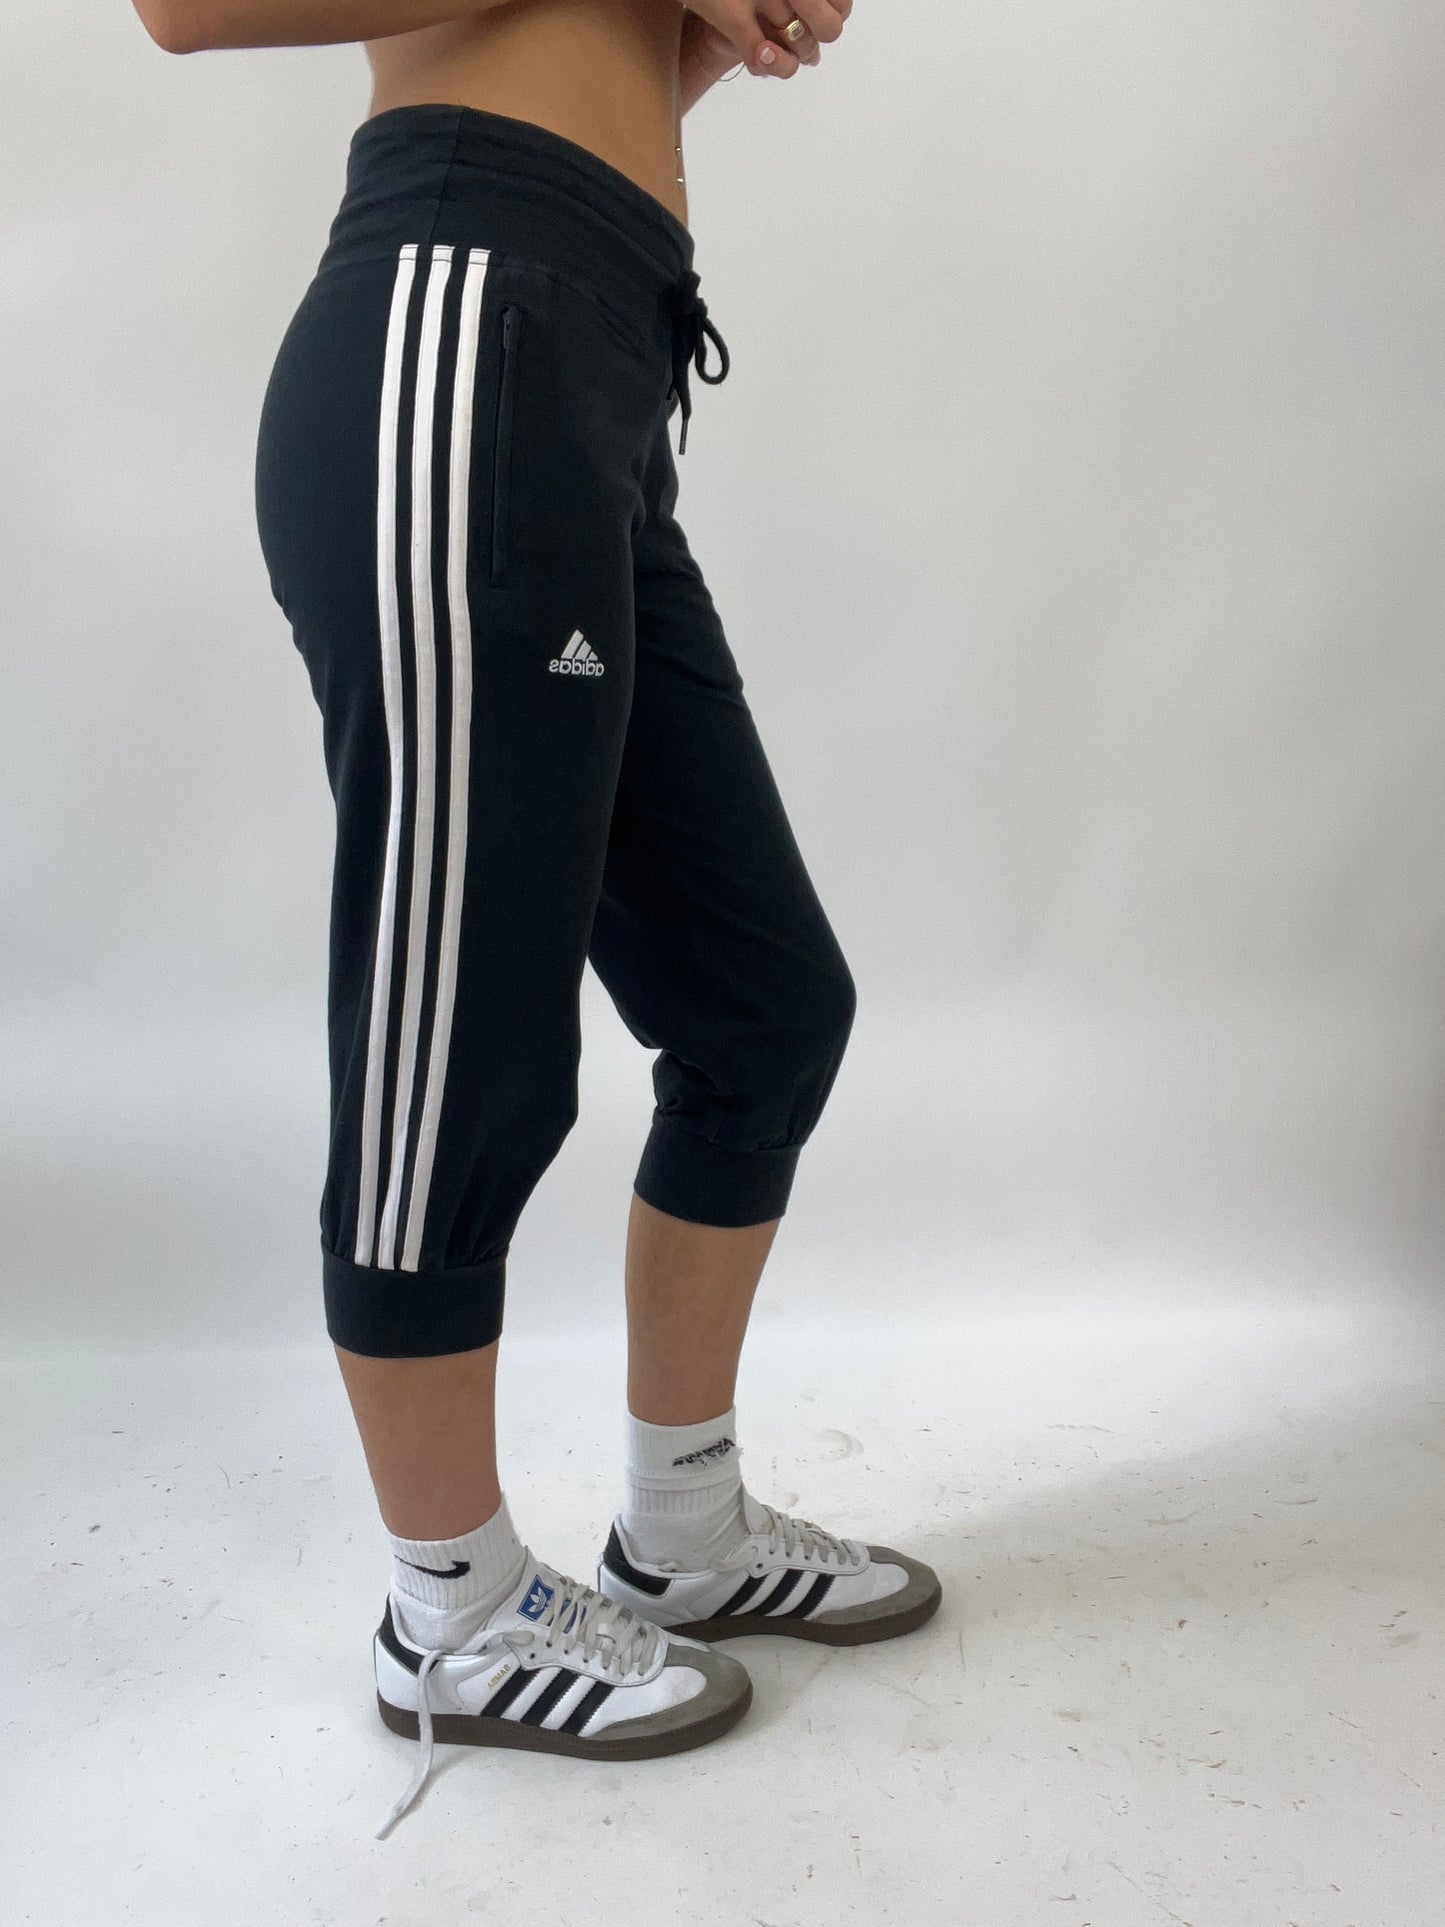 EUROS DROP | small black adidas 3/4 length leggings